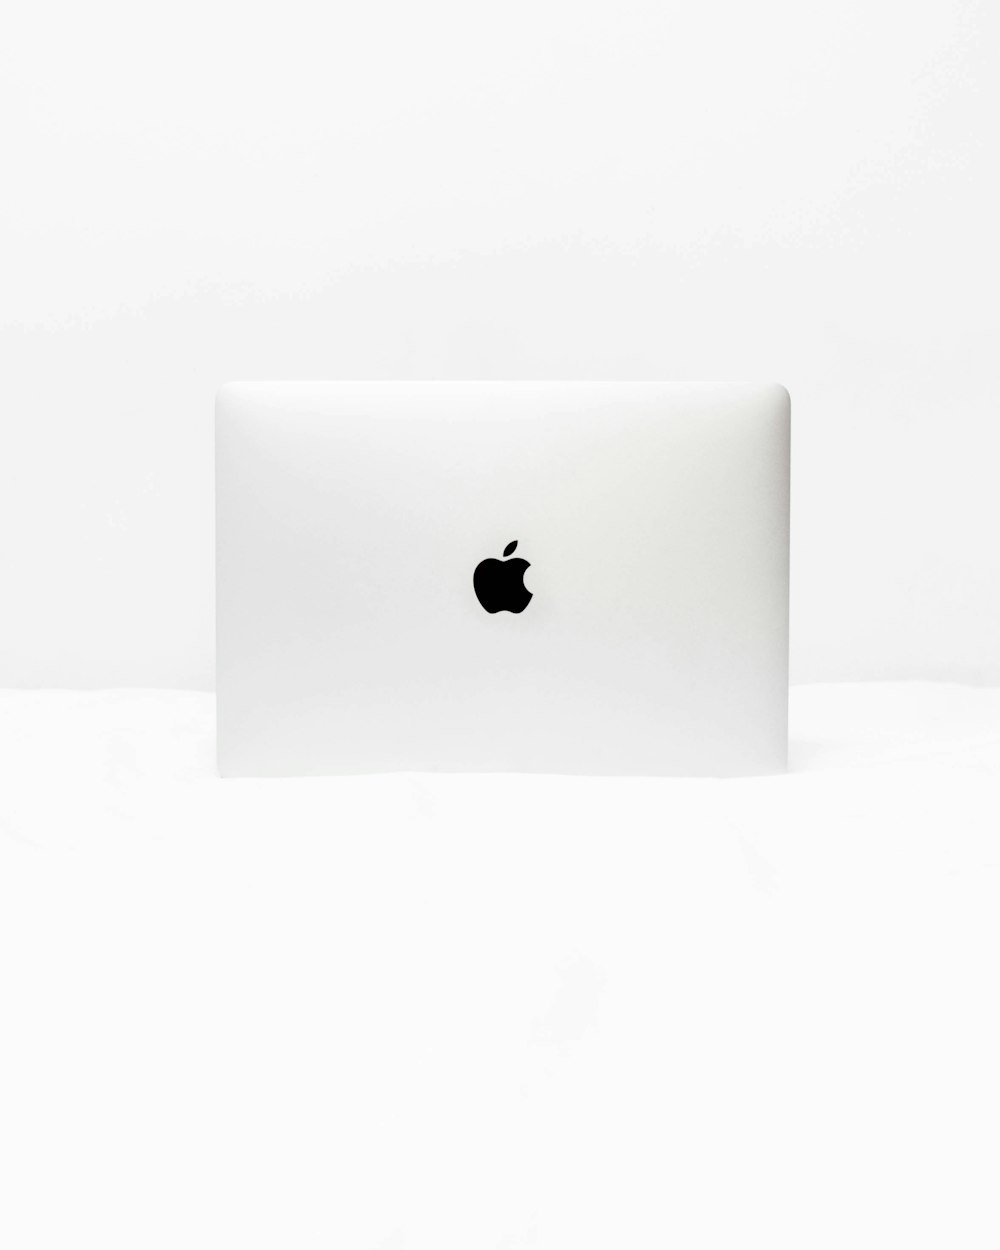 MacBook White가 흰색 표면에 열림